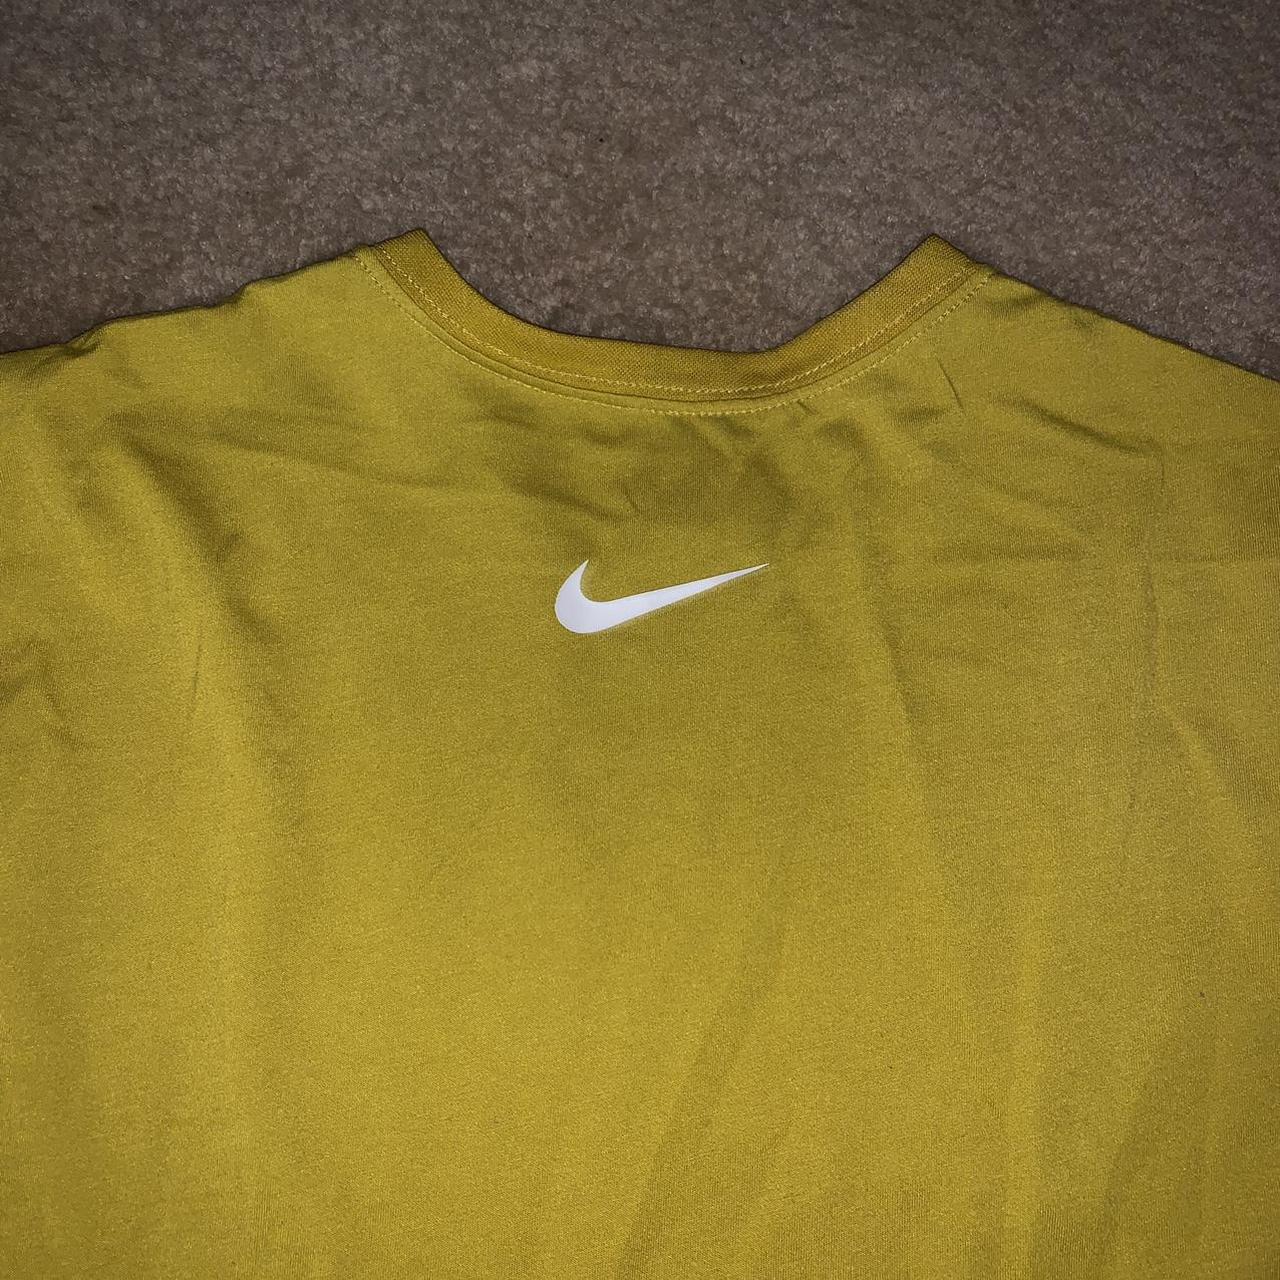 Nike Women's White and Gold T-shirt (3)